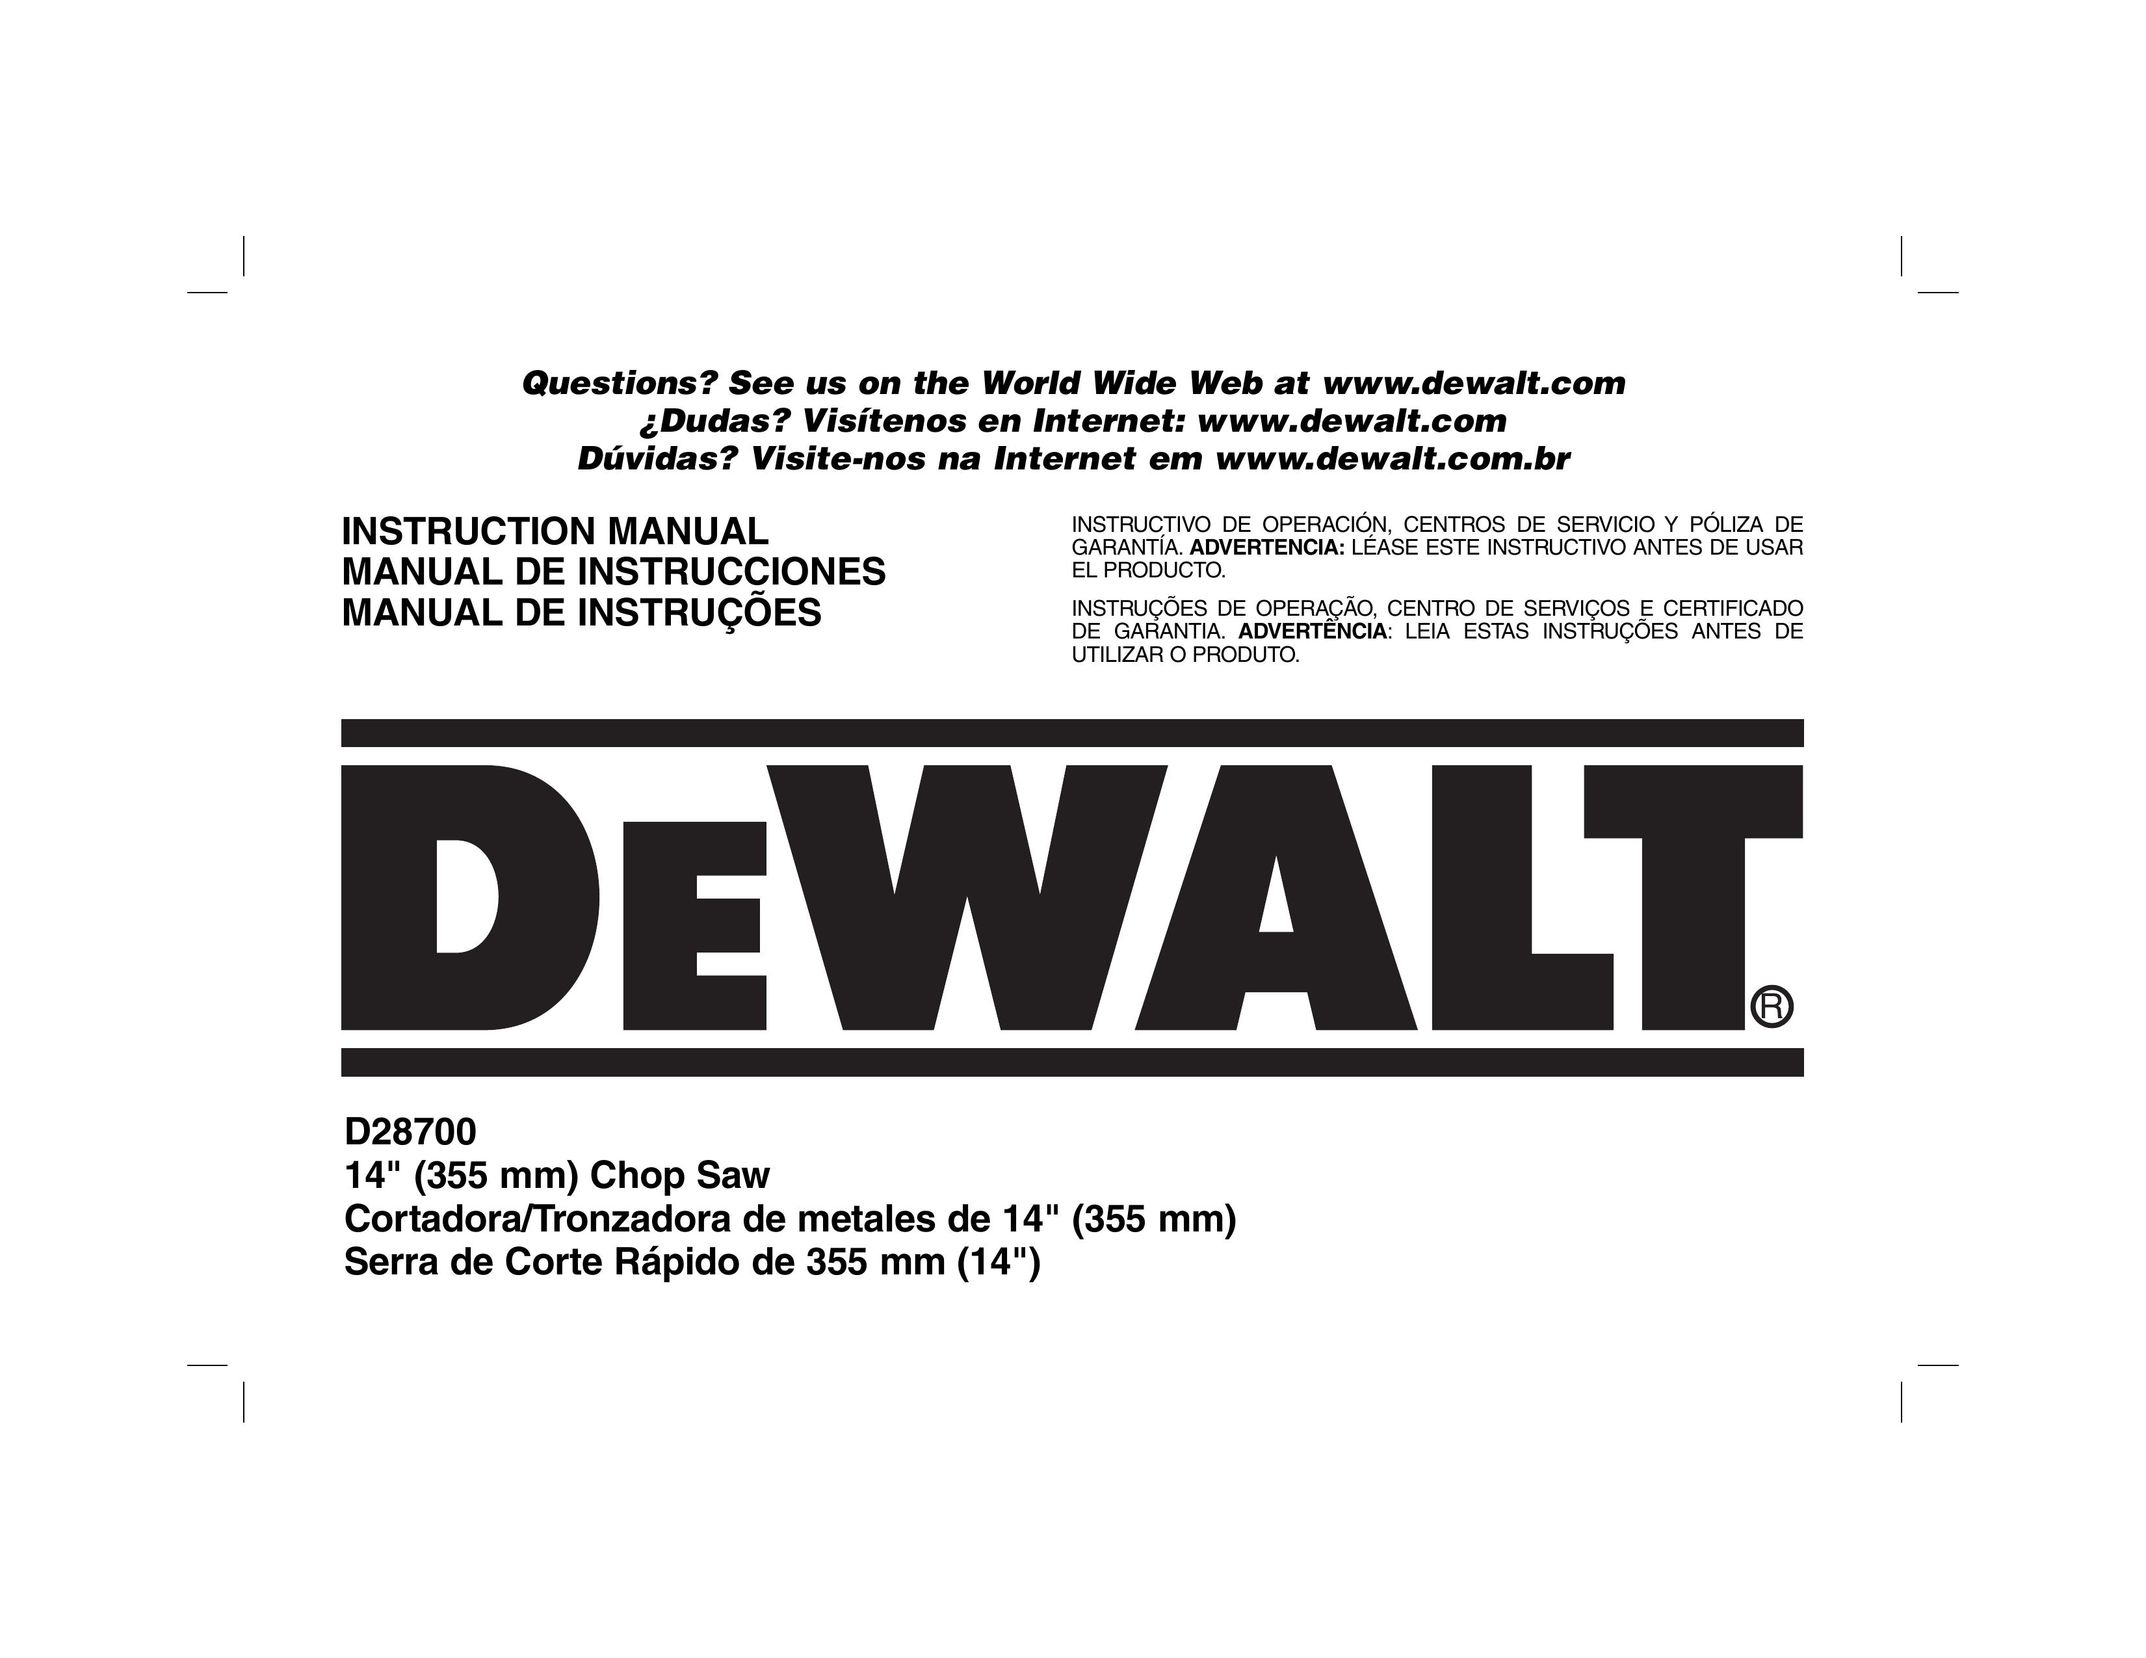 DeWalt D28700 Saw User Manual